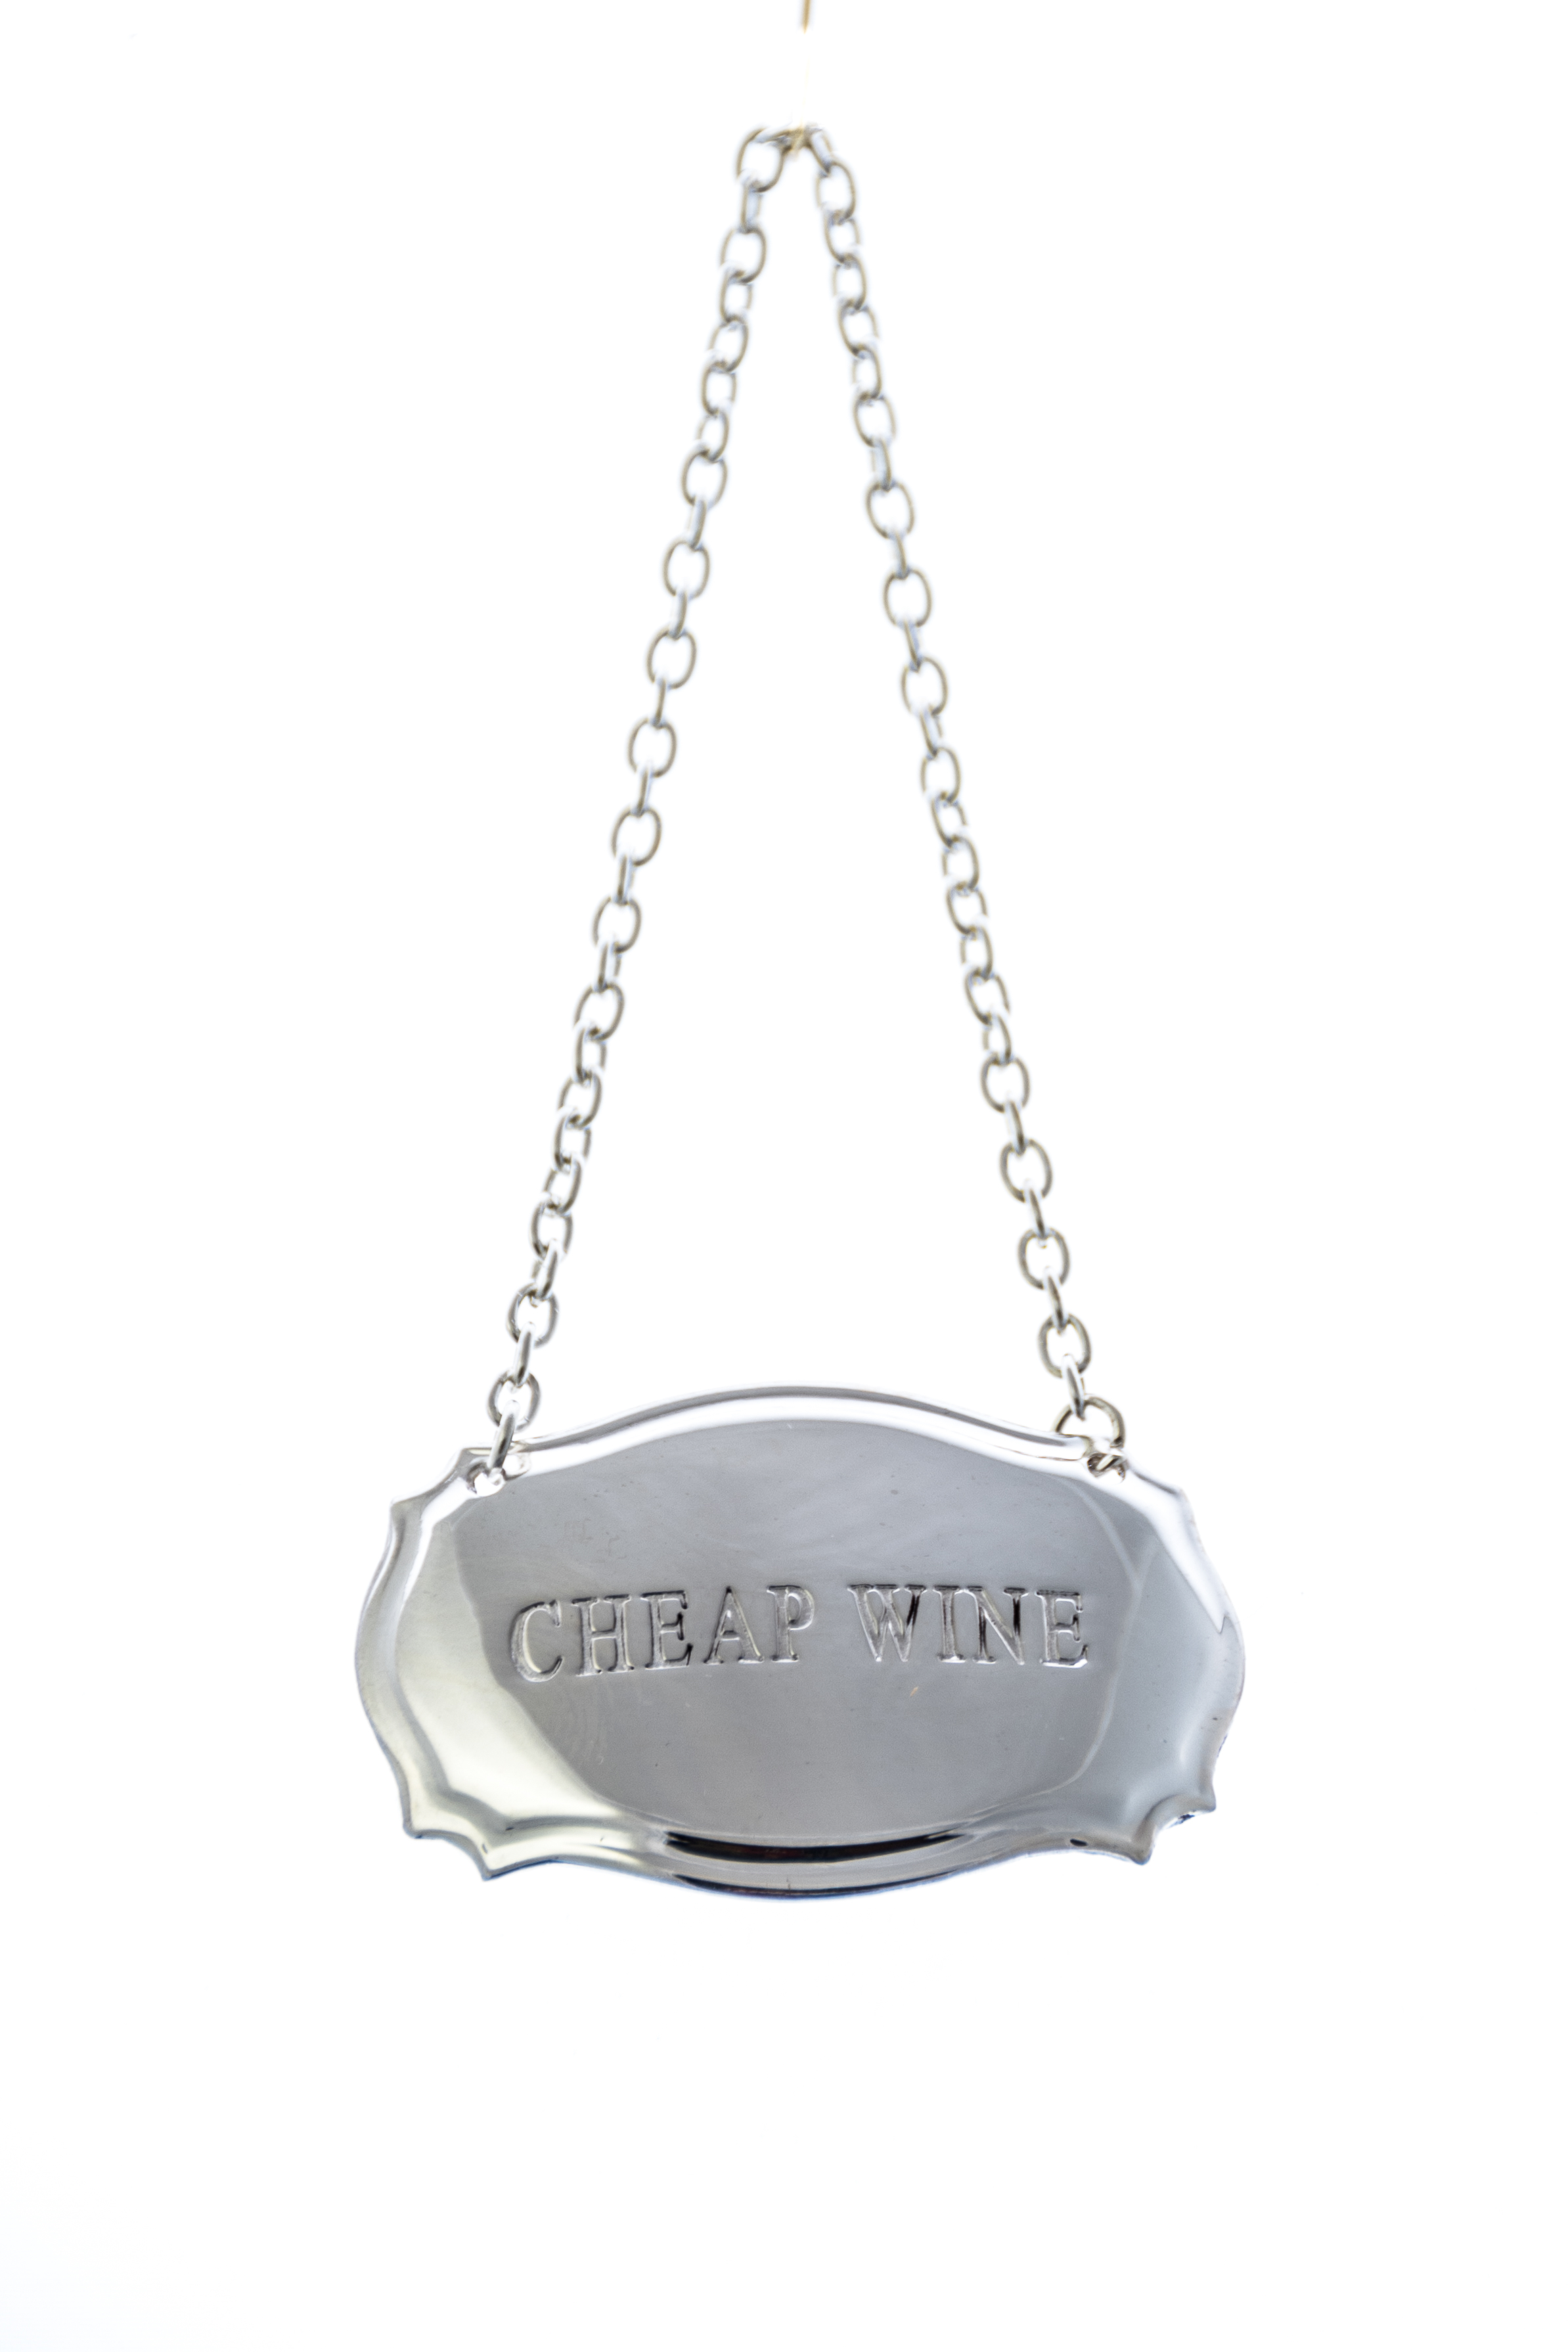 Decanter Label Chippendale Design Cheap Wine Silver Plate